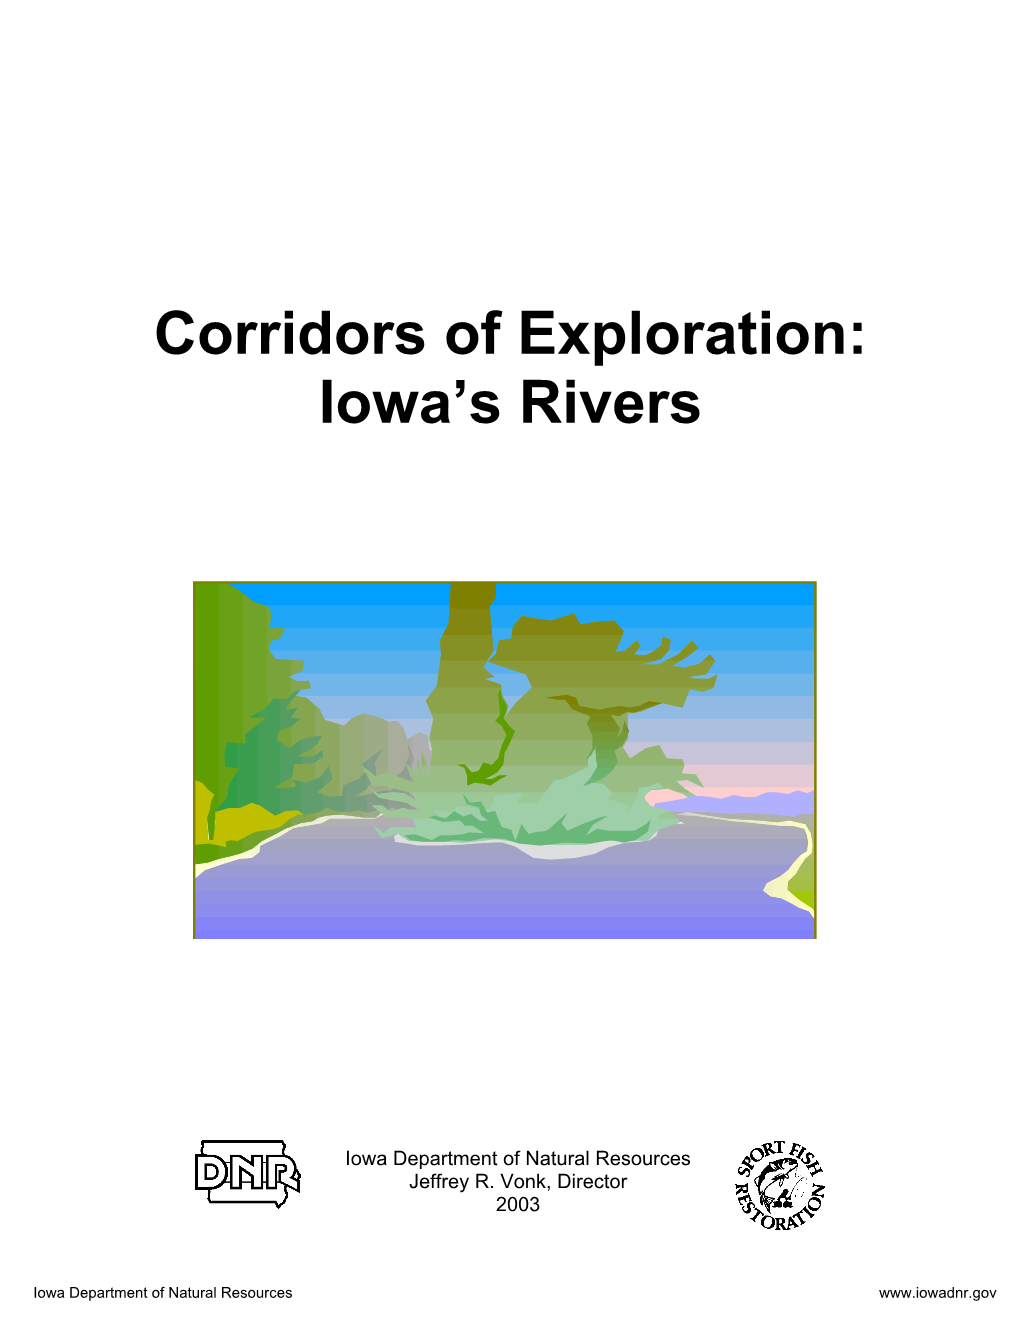 Corridors of Exploration: Iowa's Rivers